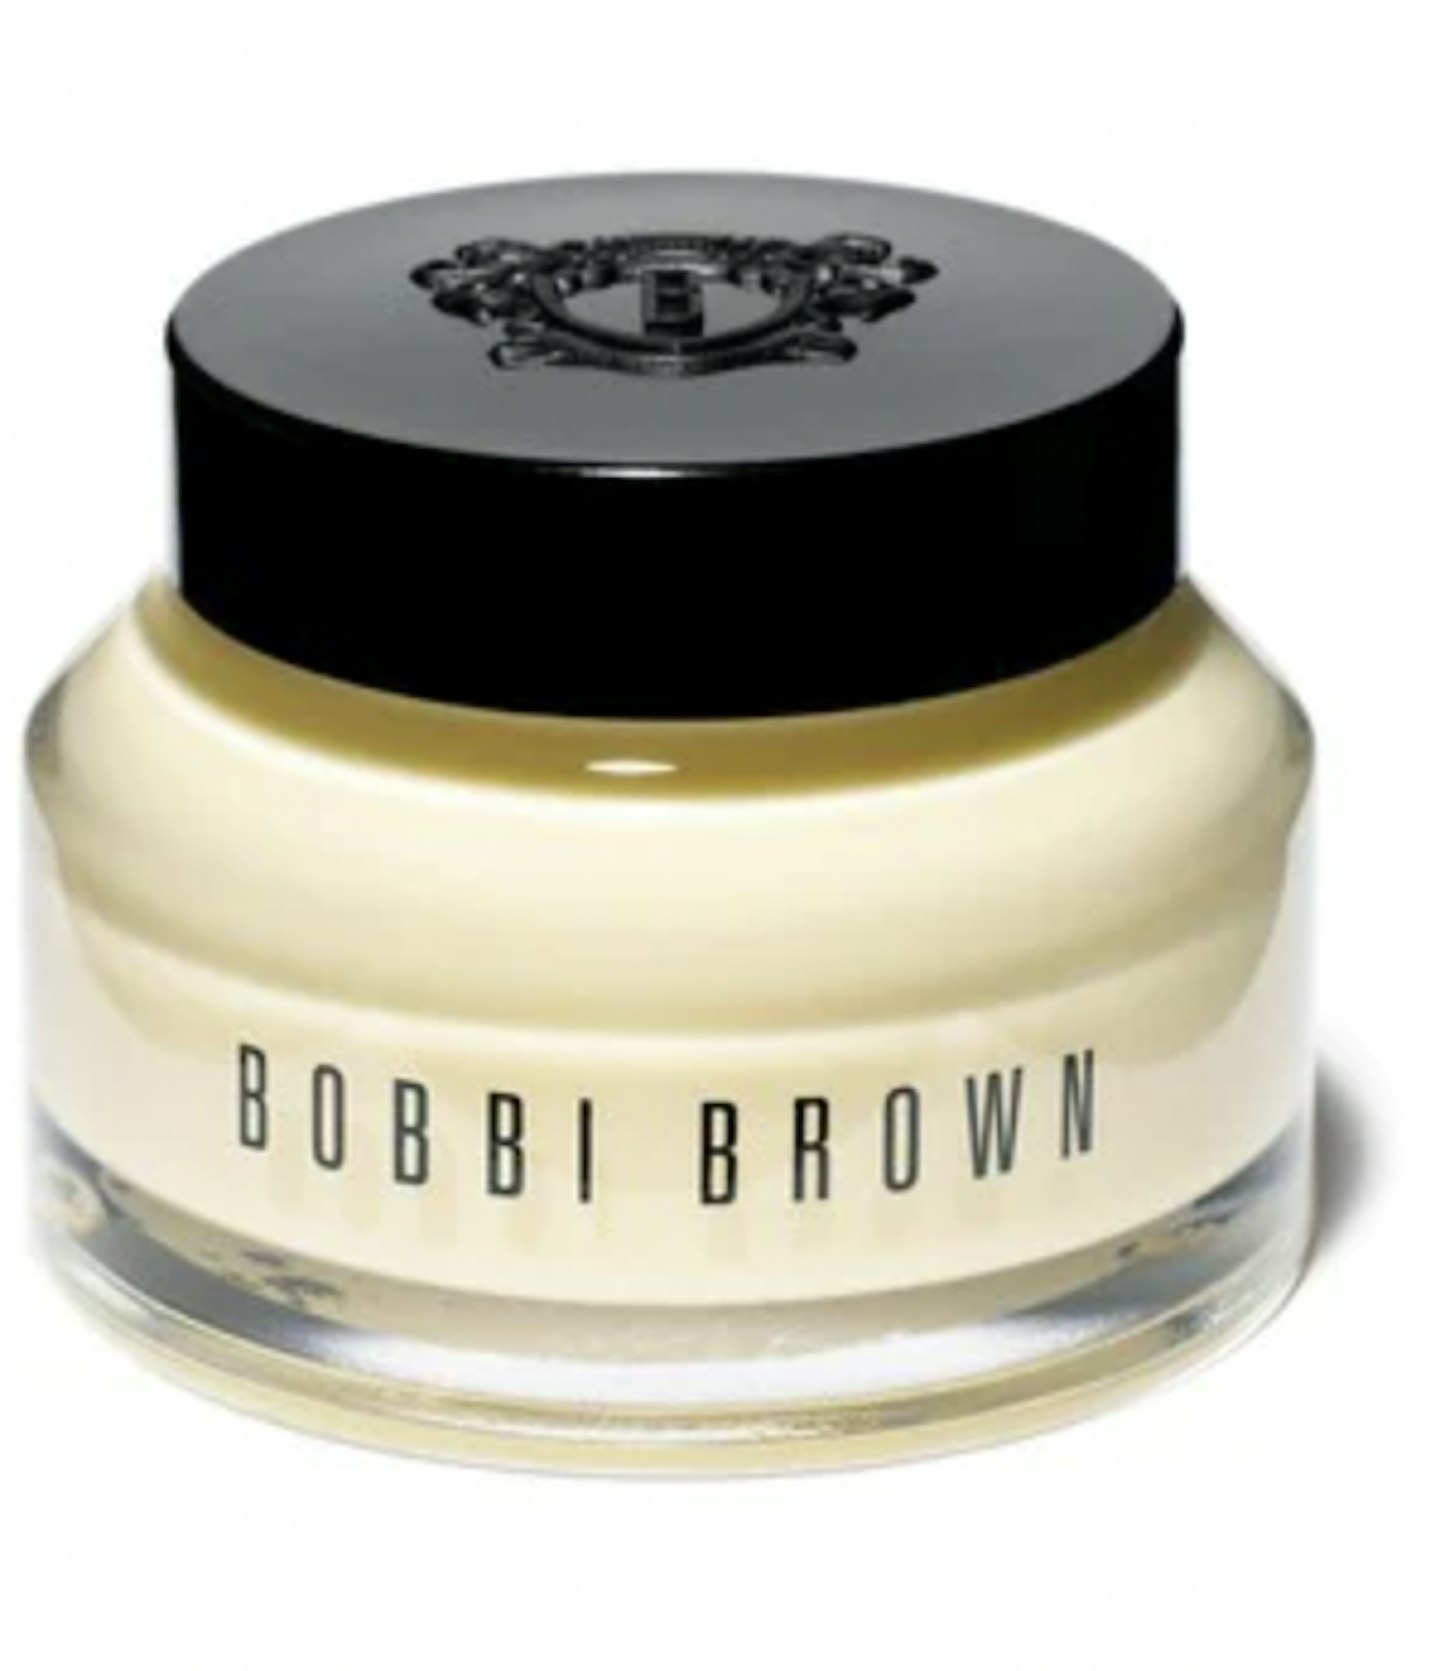 Bobbi Brown Vitamin Enriched Face Base, £46.50